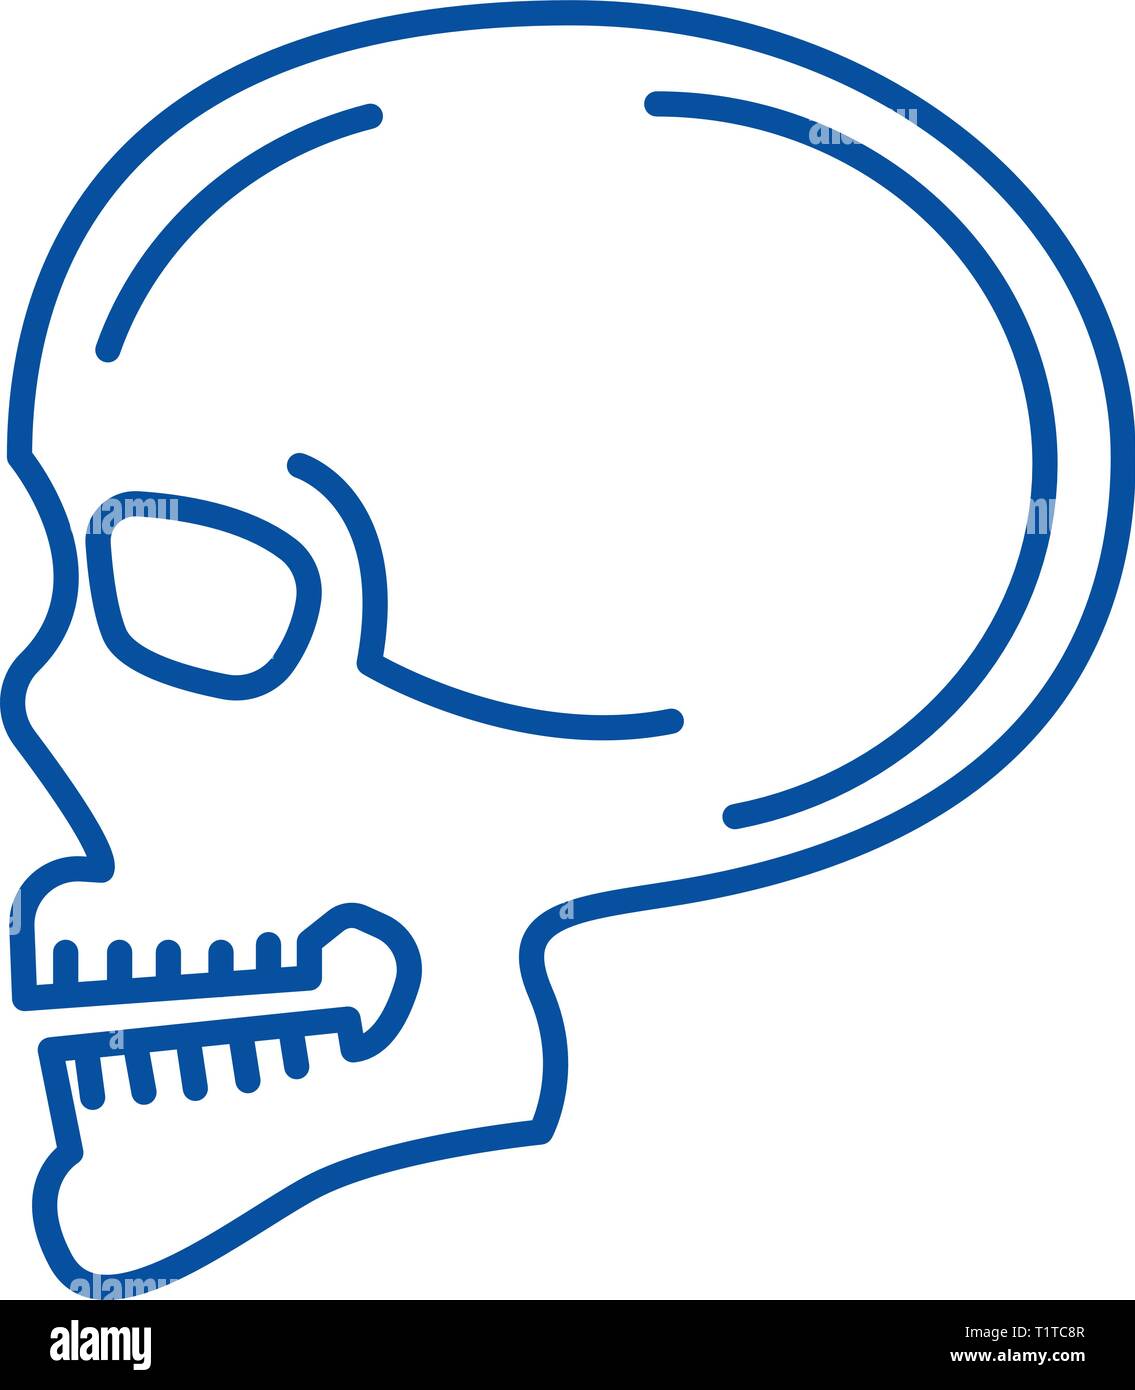 skull front profile